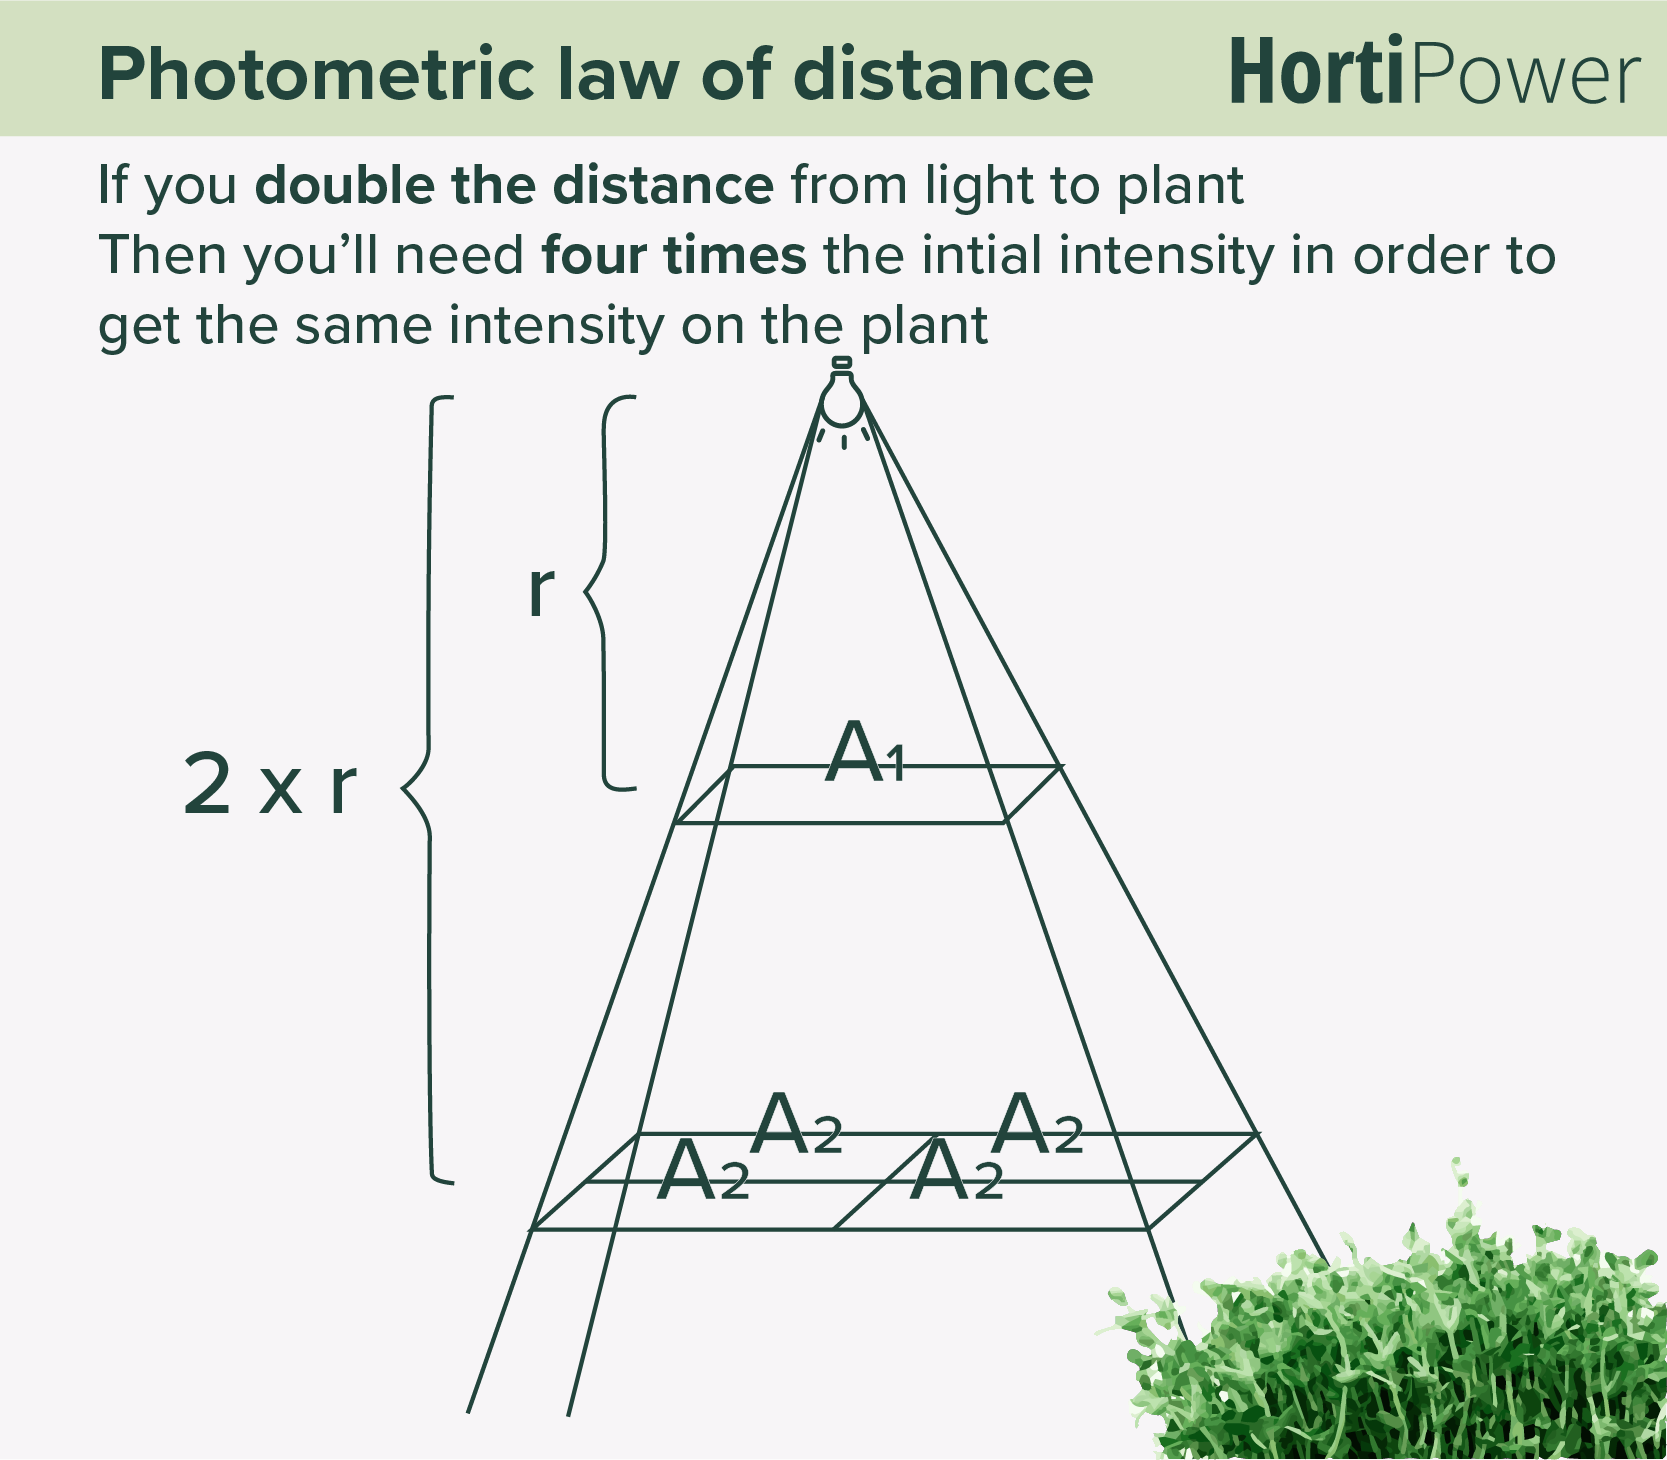 Photometric law of distance growlights